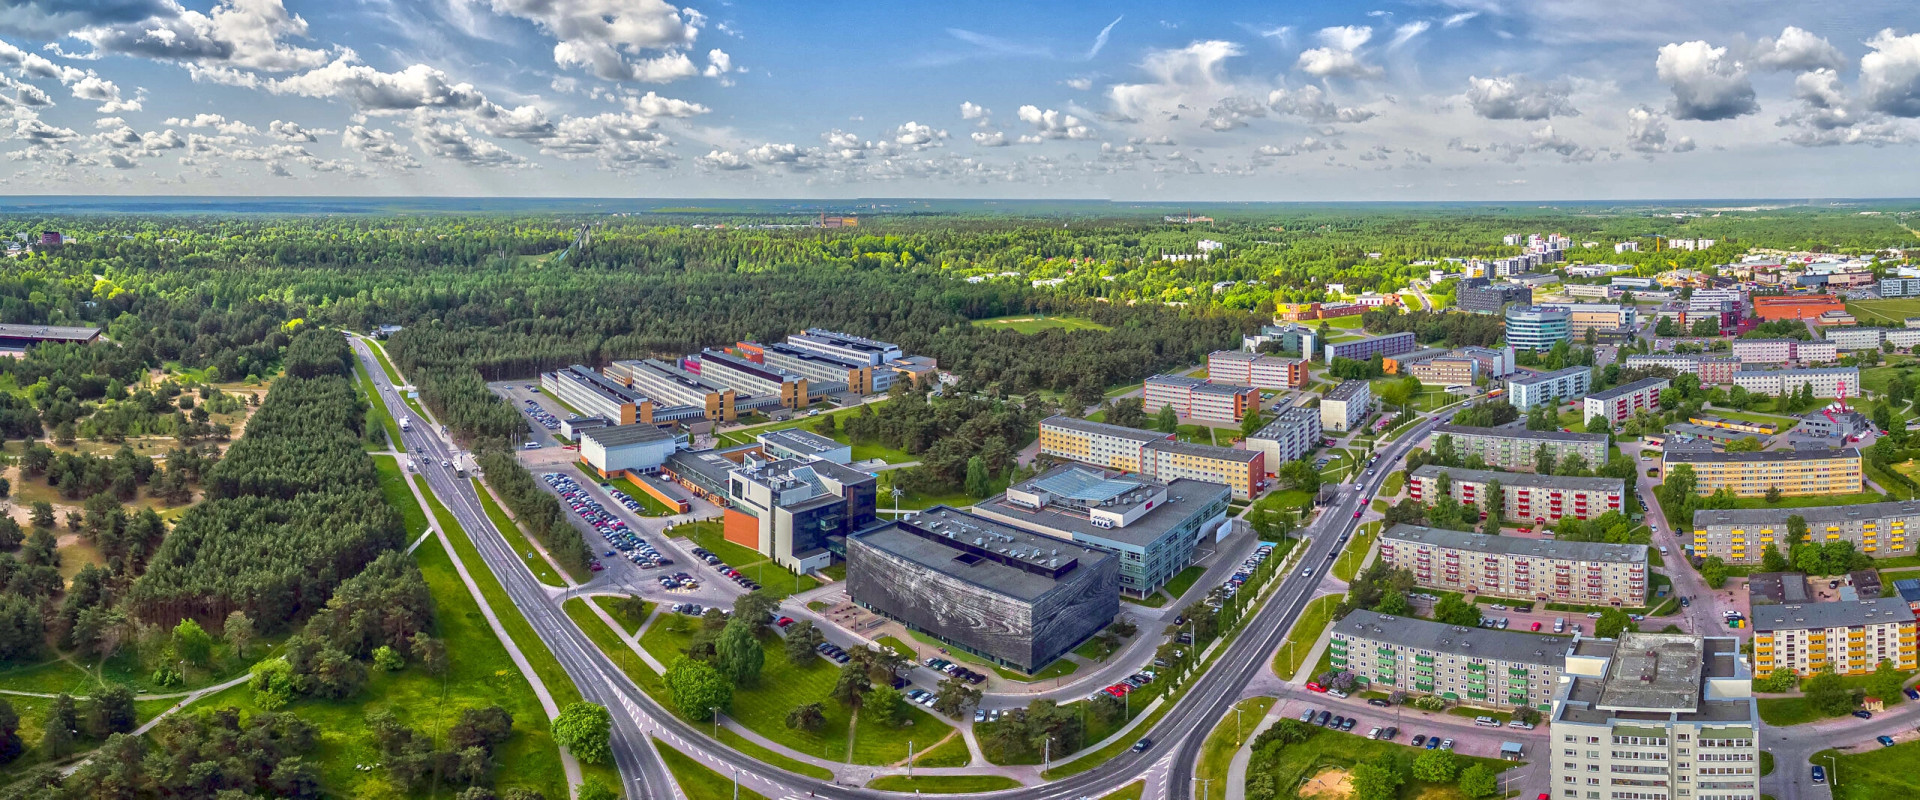 TalTech Innovation and Business Centre Mektory | Таллинн | Площадка для мероприятий - фото галереи